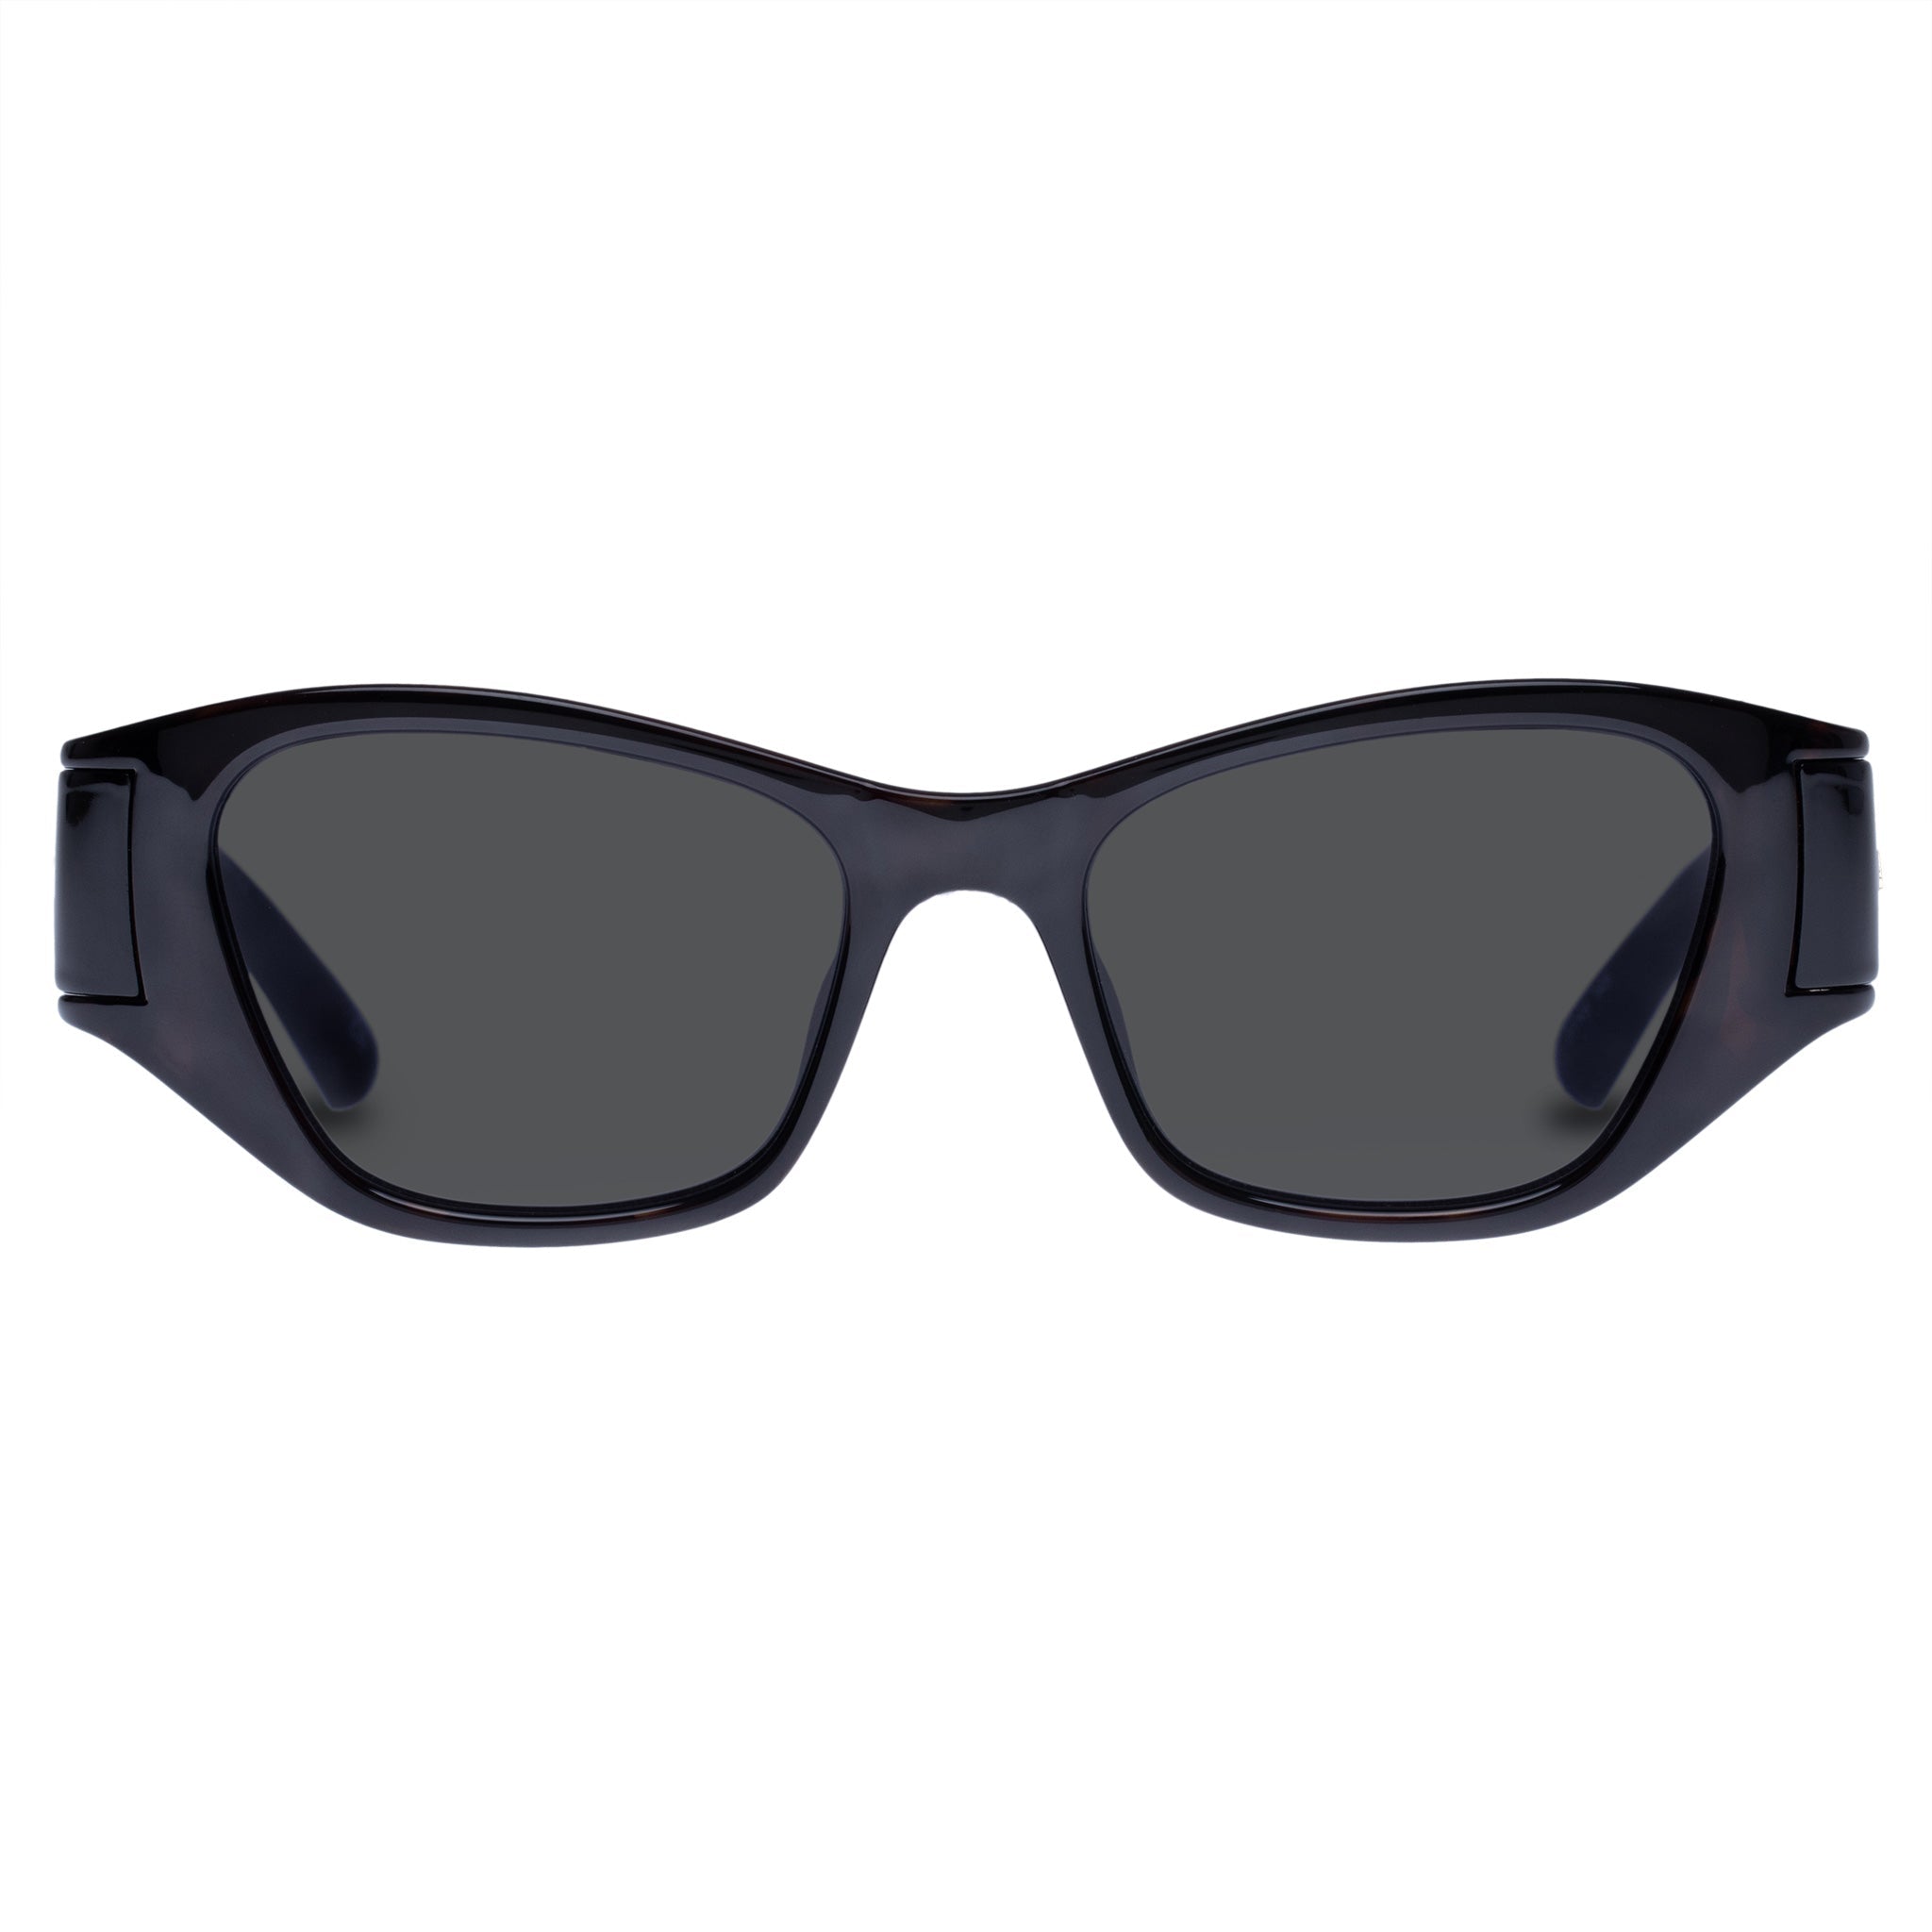 LE SPECS SWEET FANTASY Black Sunglasses | PresenceConcept.com